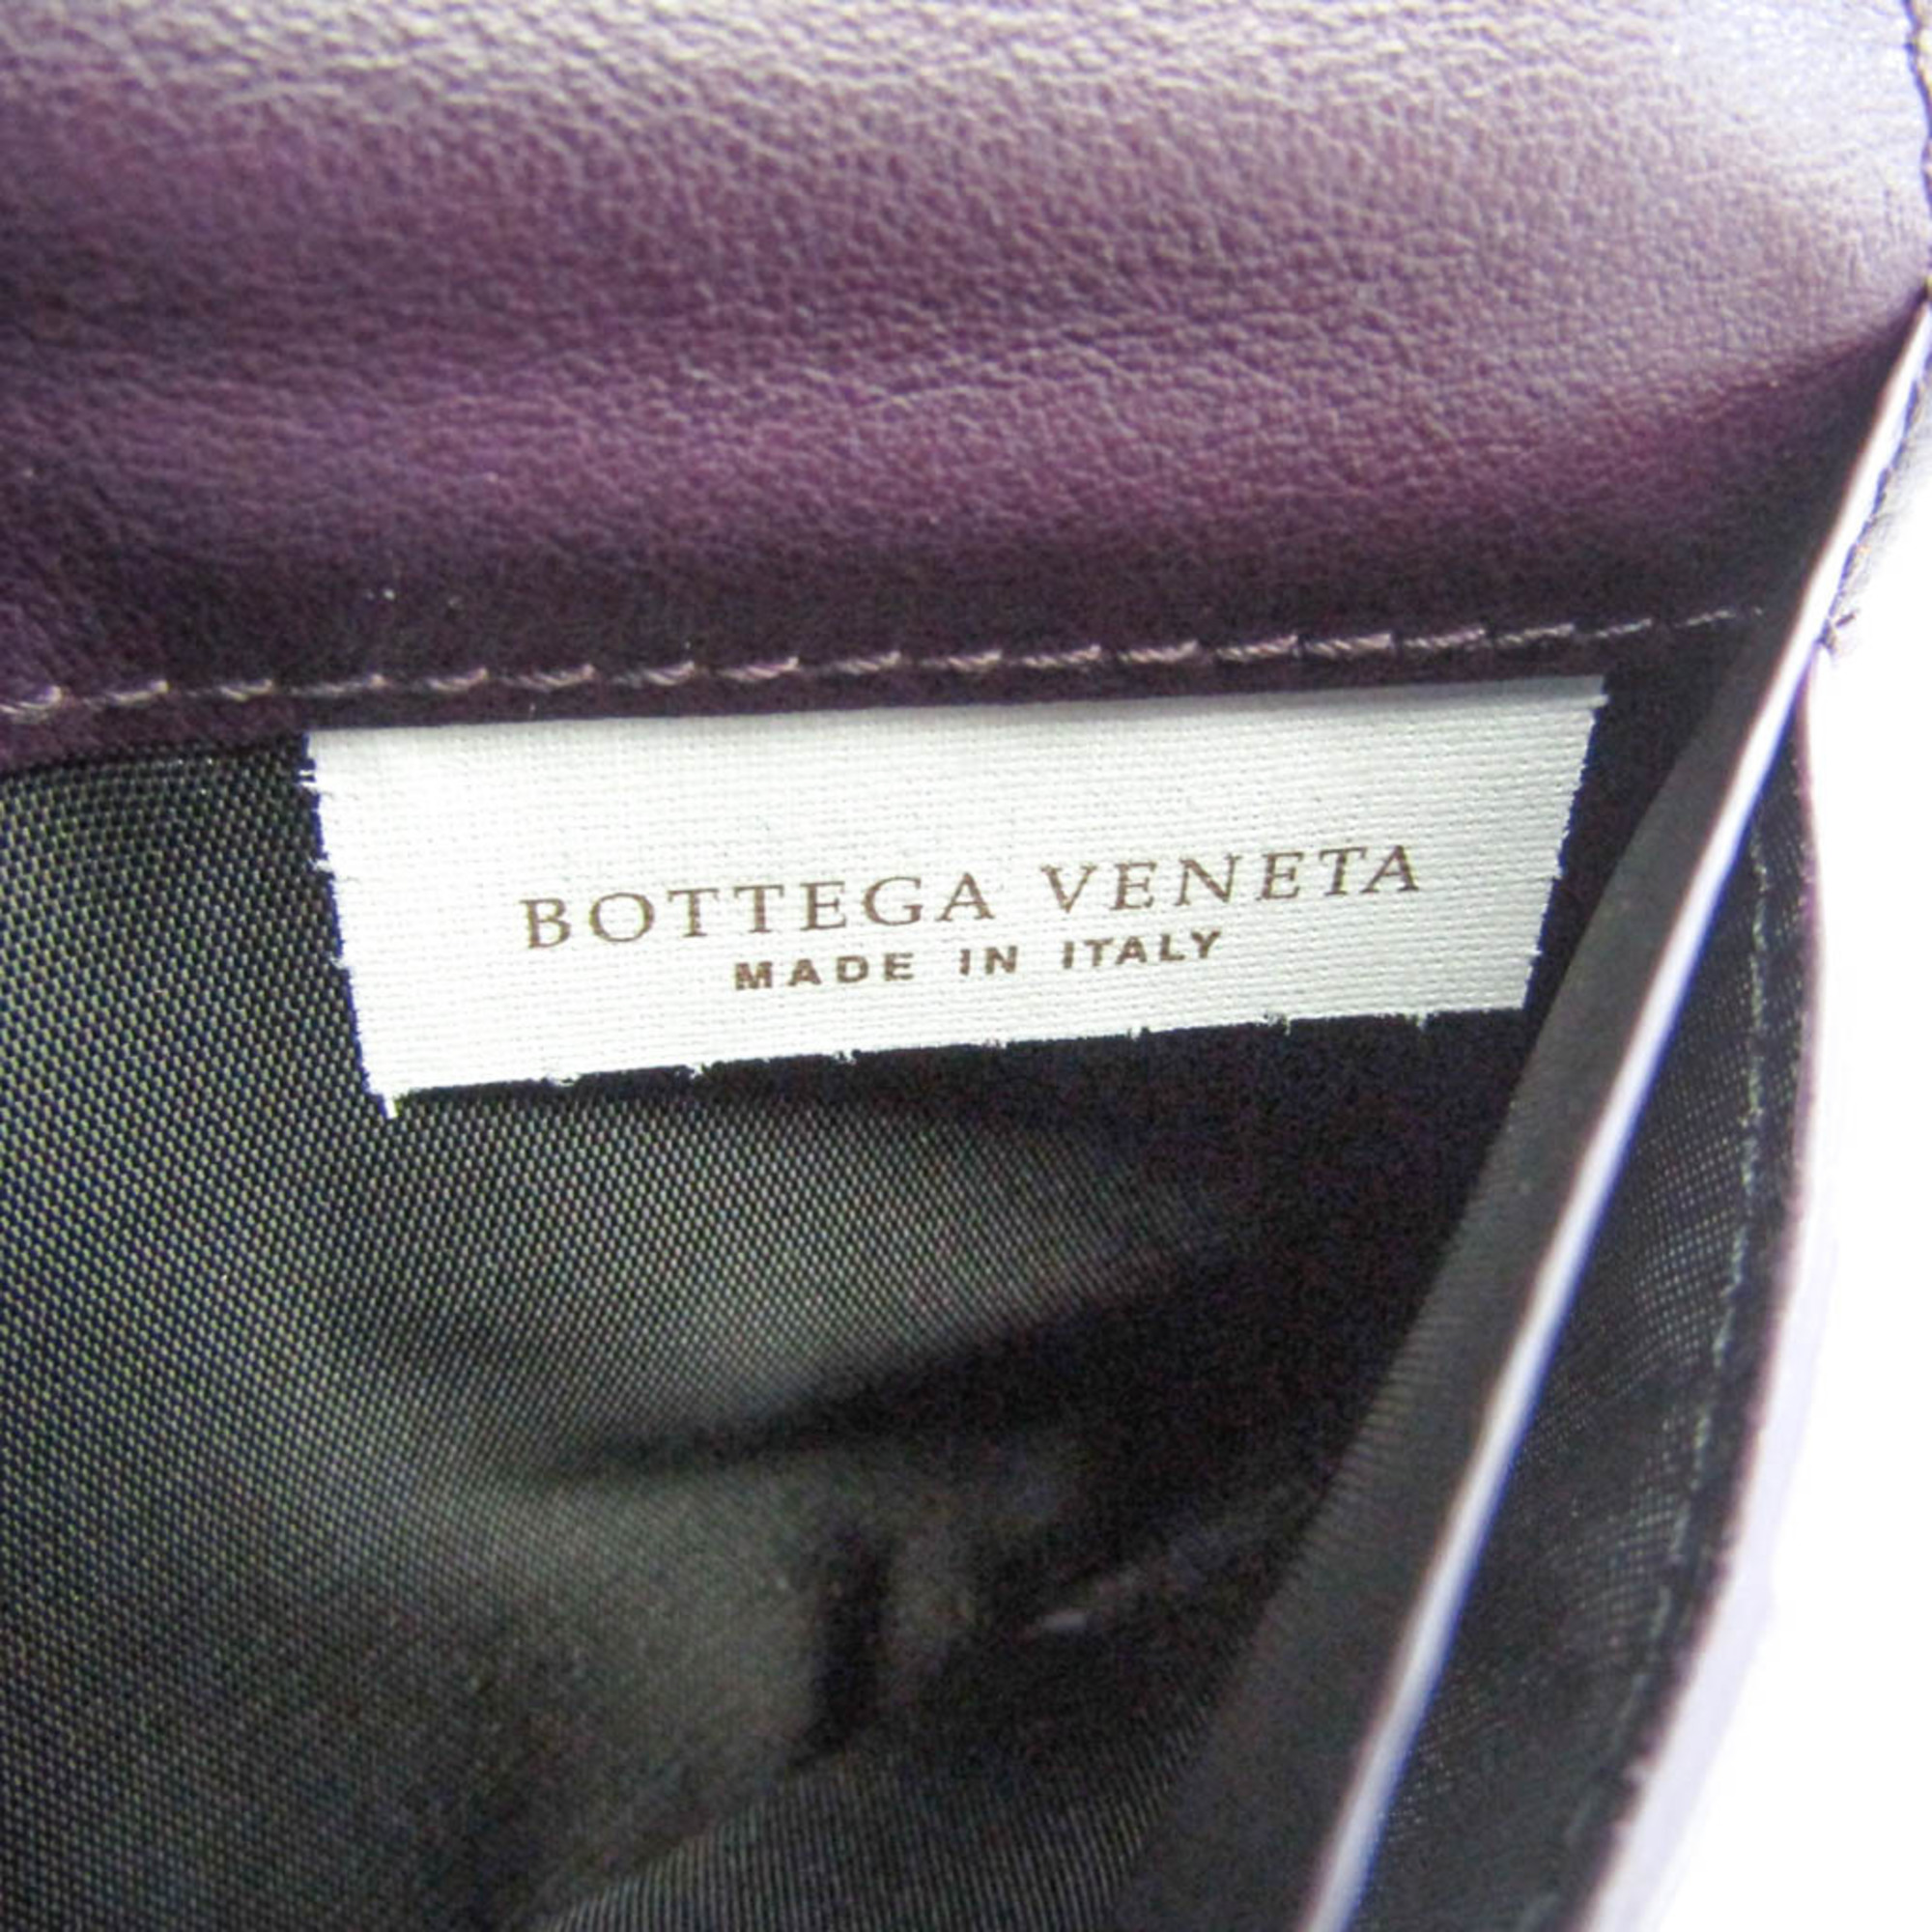 Bottega Veneta Intrecciato Women's Leather Middle Wallet (bi-fold) Pink Red,Purple